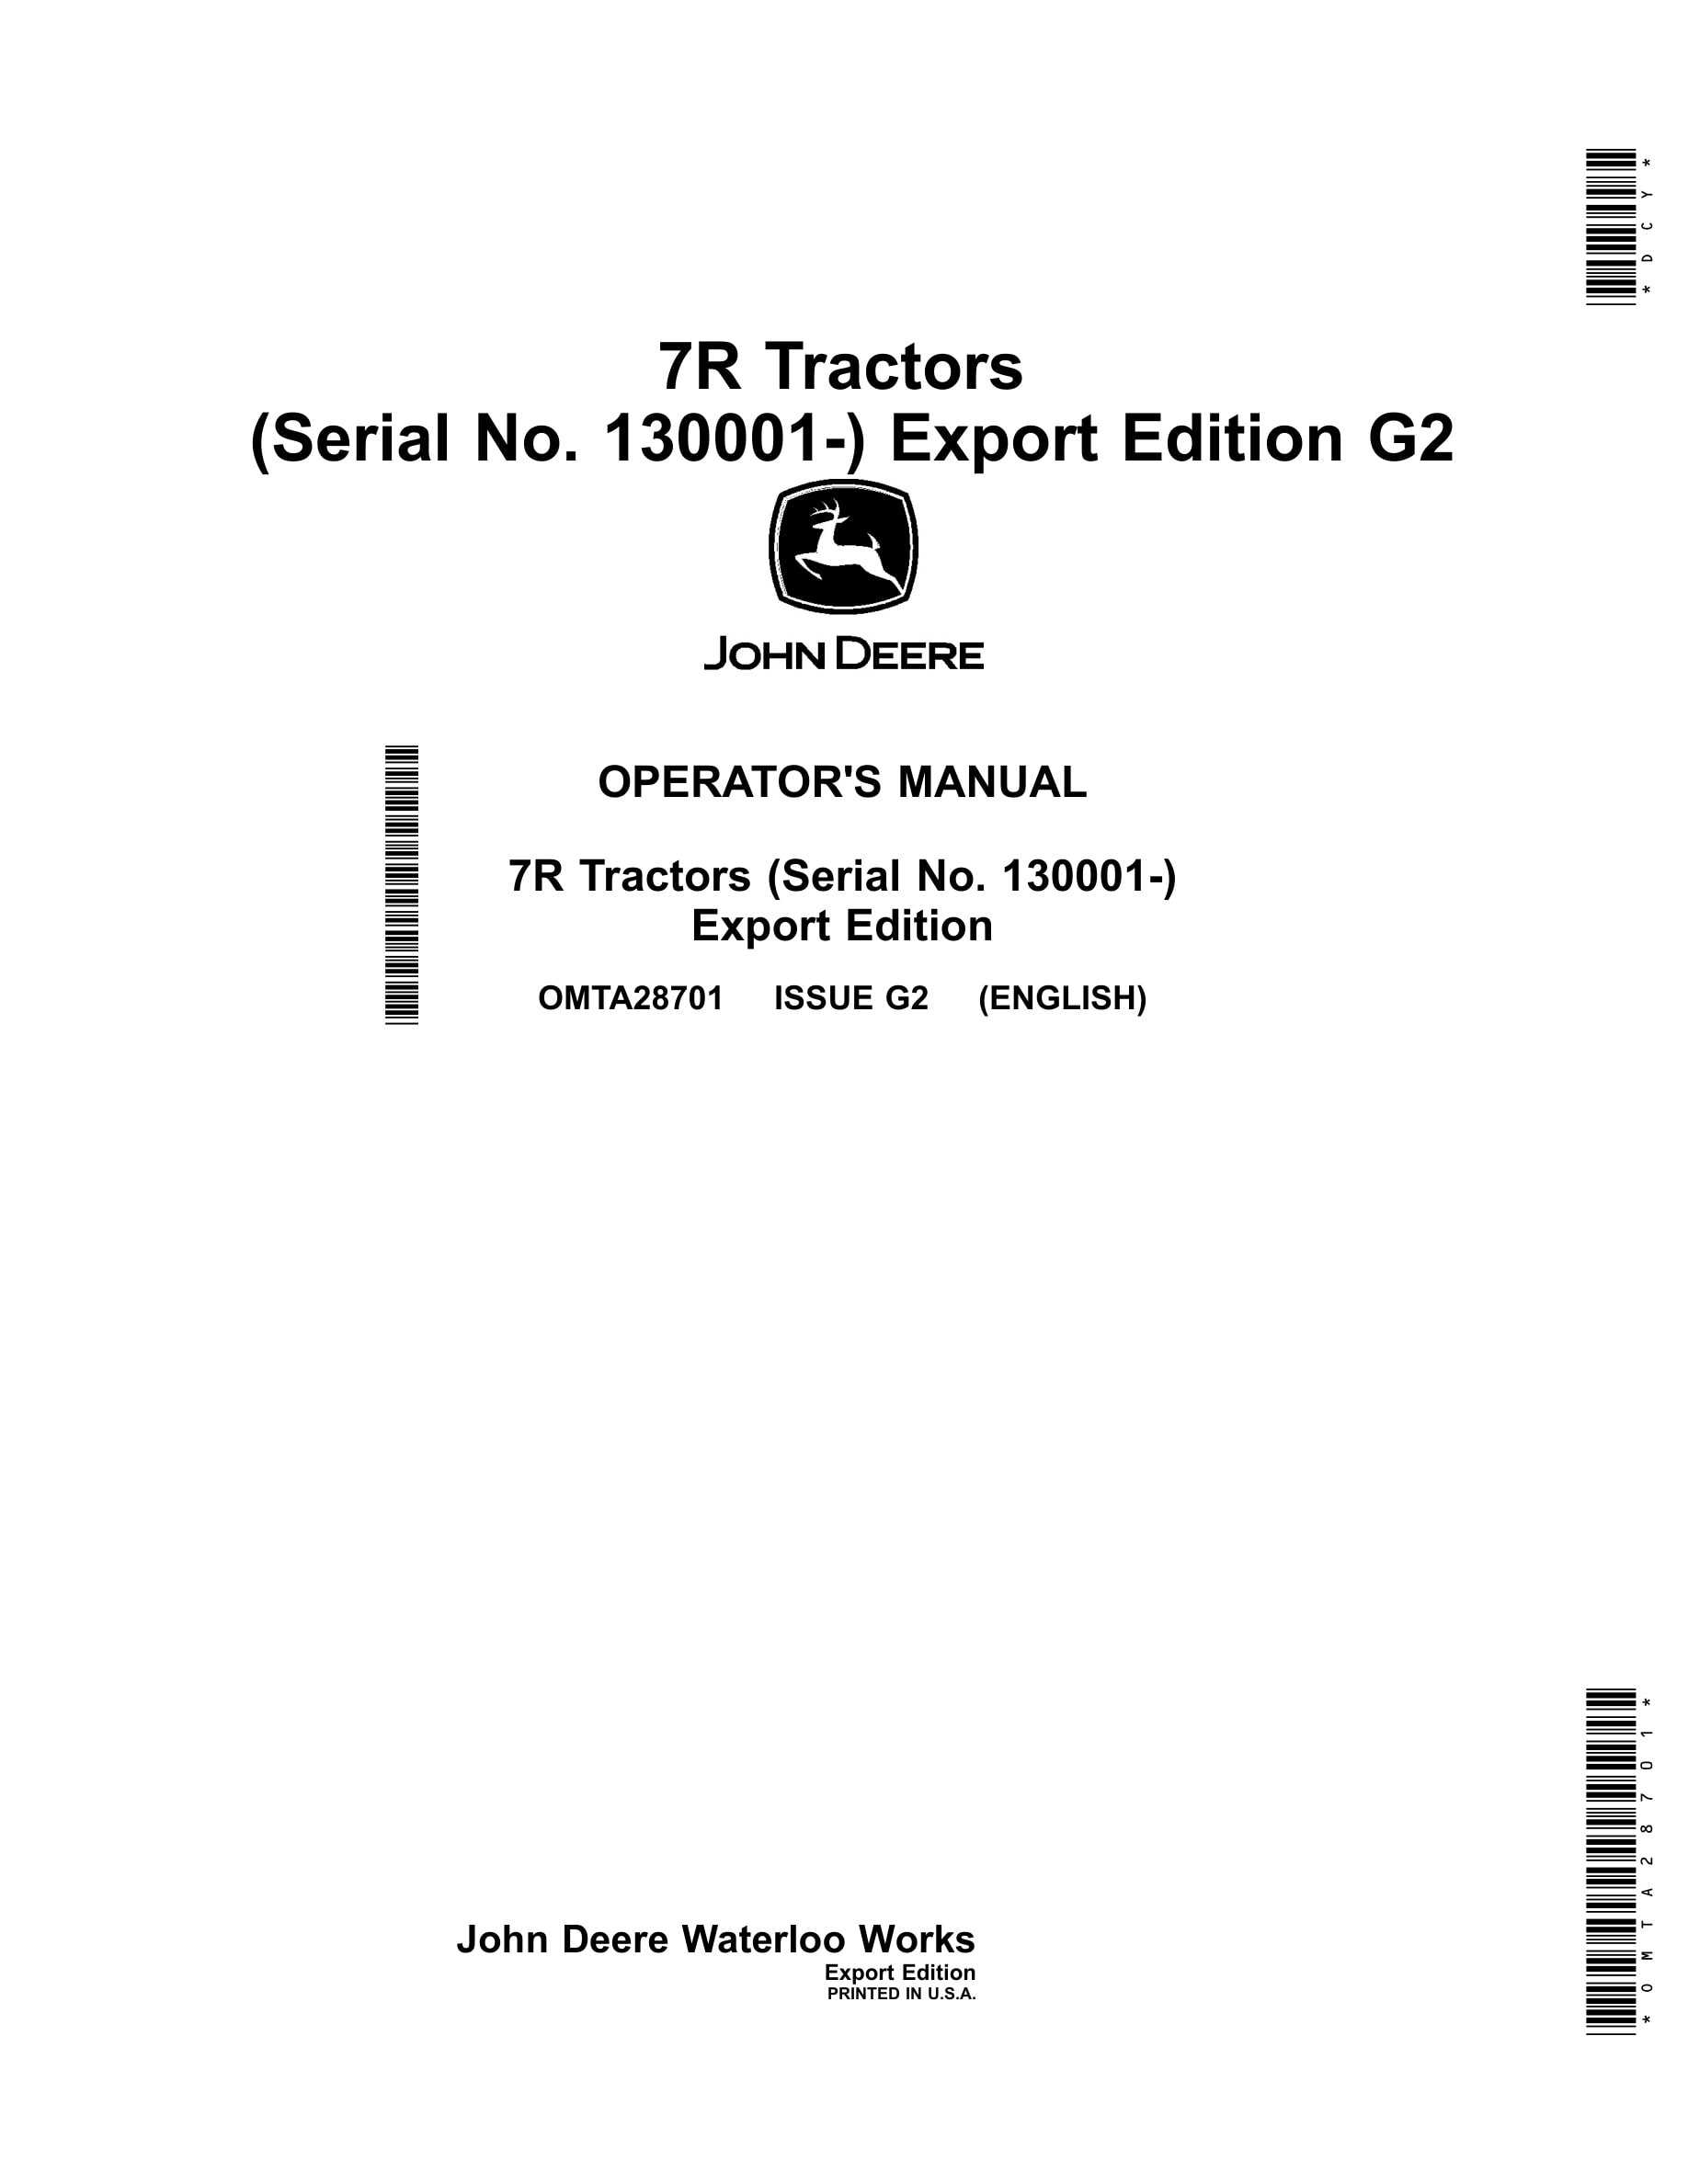 John Deere 7r Tractors Operator Manuals OMTA28701-1